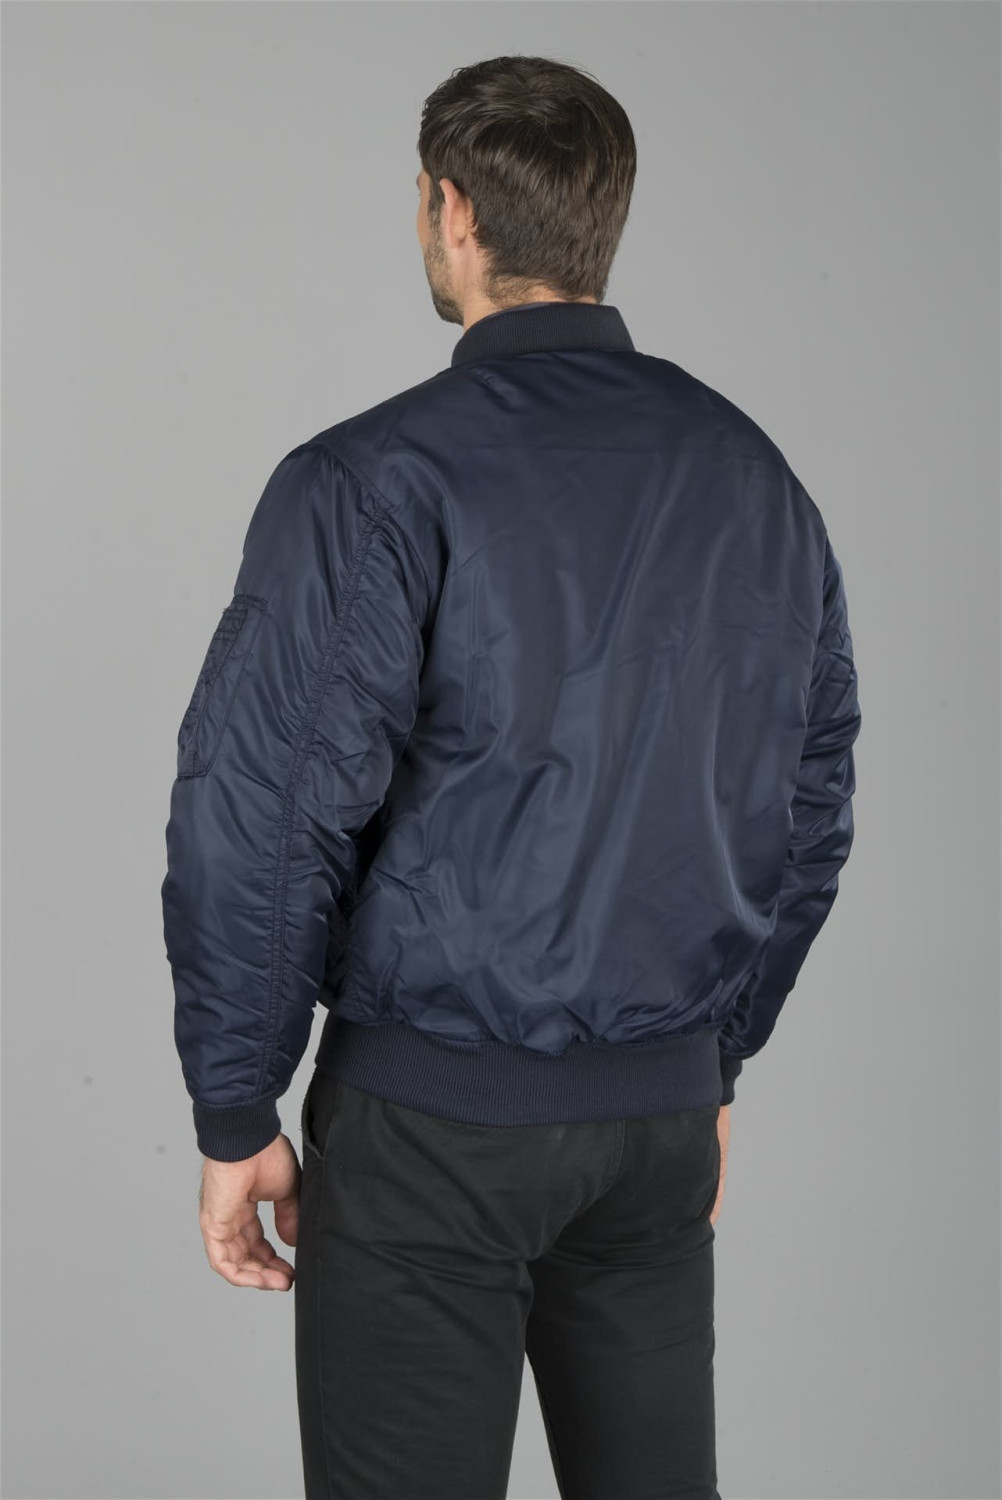 Buy Brandit MA1 Jacket dark navy (3149-168) from £37.49 (Today) – Best ...